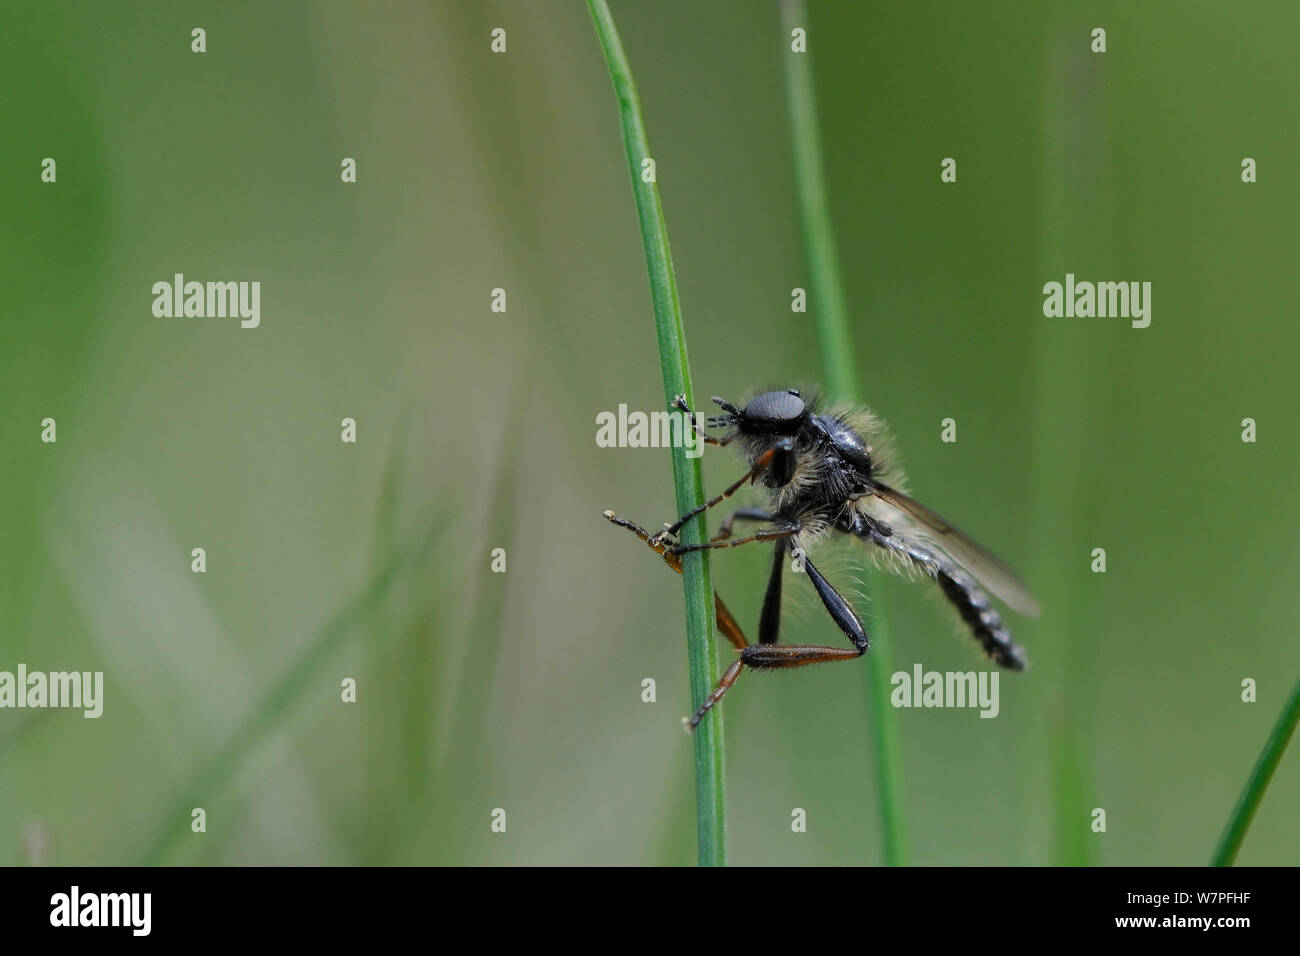 Male March fly (Bibio lanigerus) resting on grass stem in heathland, Sandy, Bedfordshire, UK, April. Stock Photo